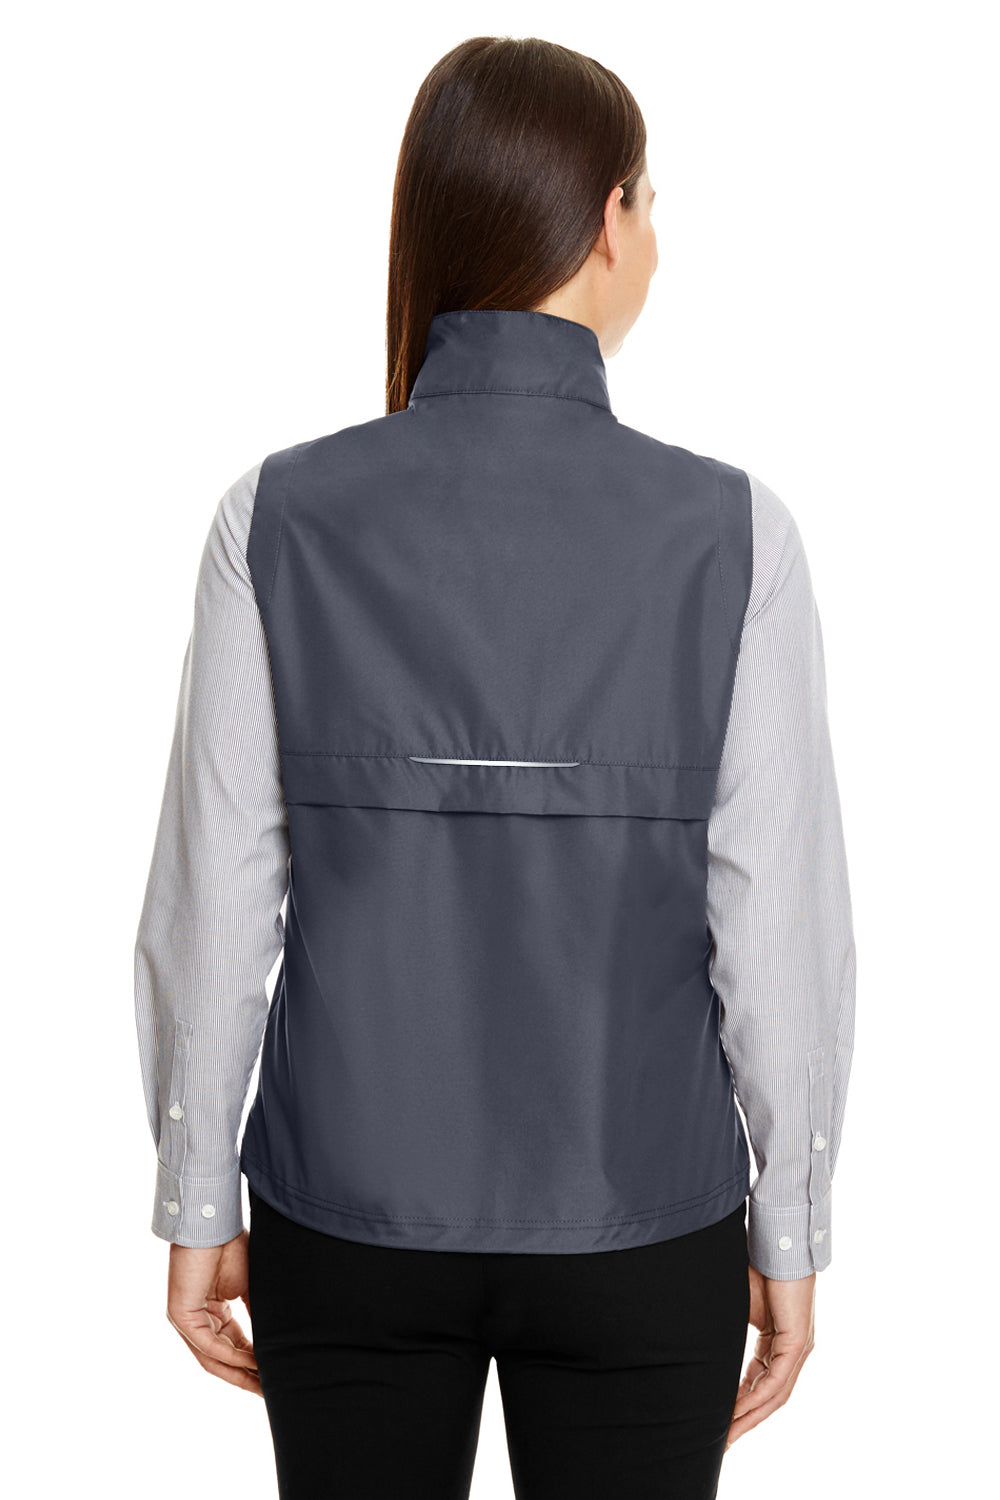 Core 365 CE703W Womens Techno Lite Water Resistant Full Zip Vest Carbon Grey Back